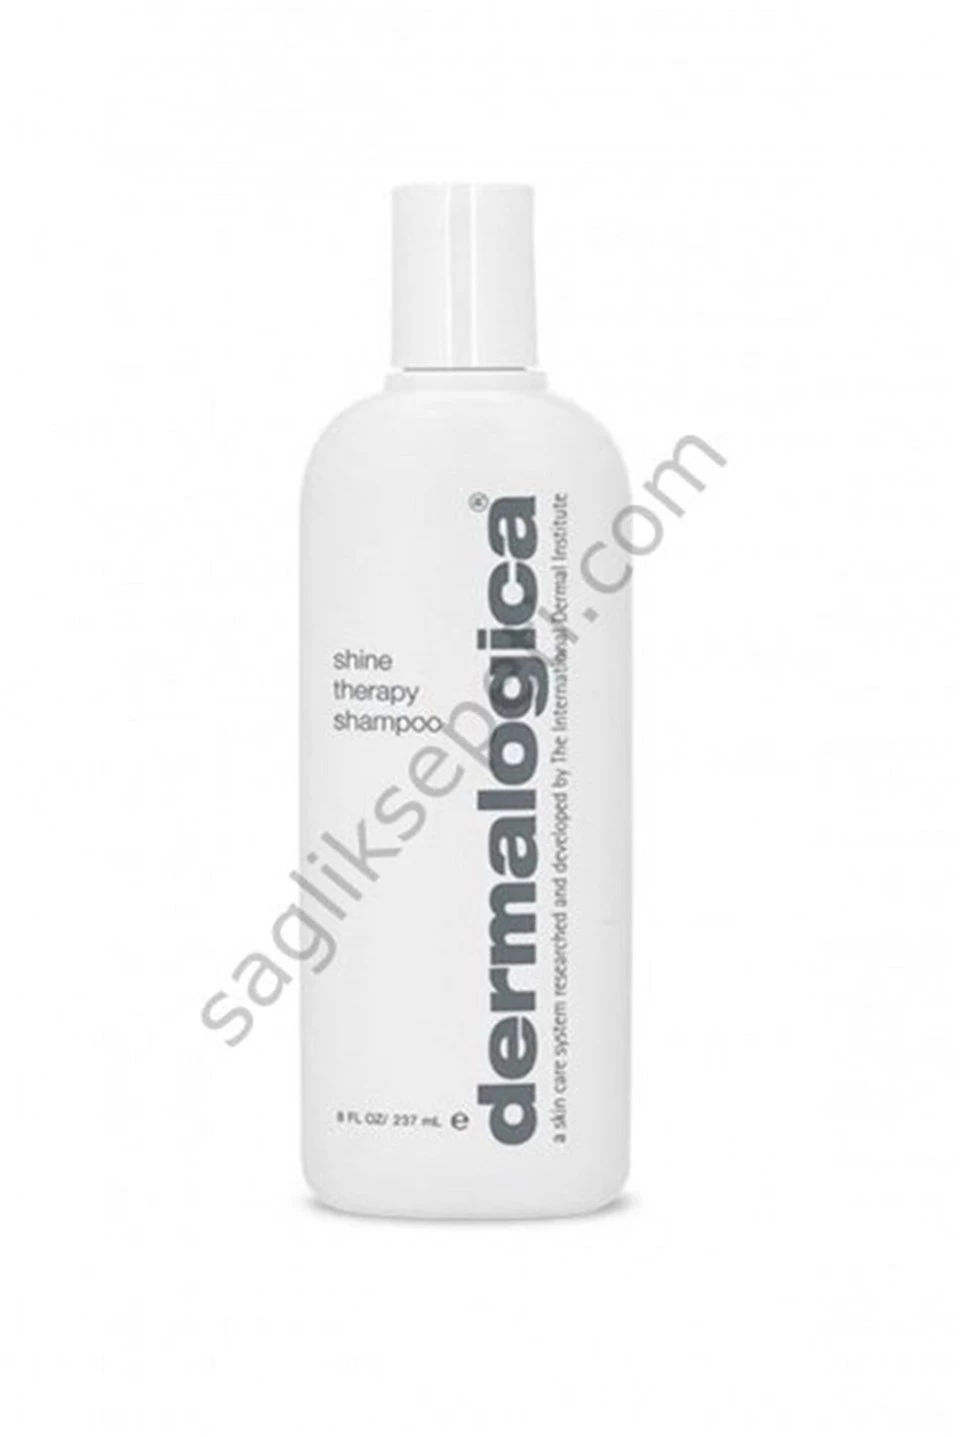 Dermalogica Shine Therapy Shampoo 237ml